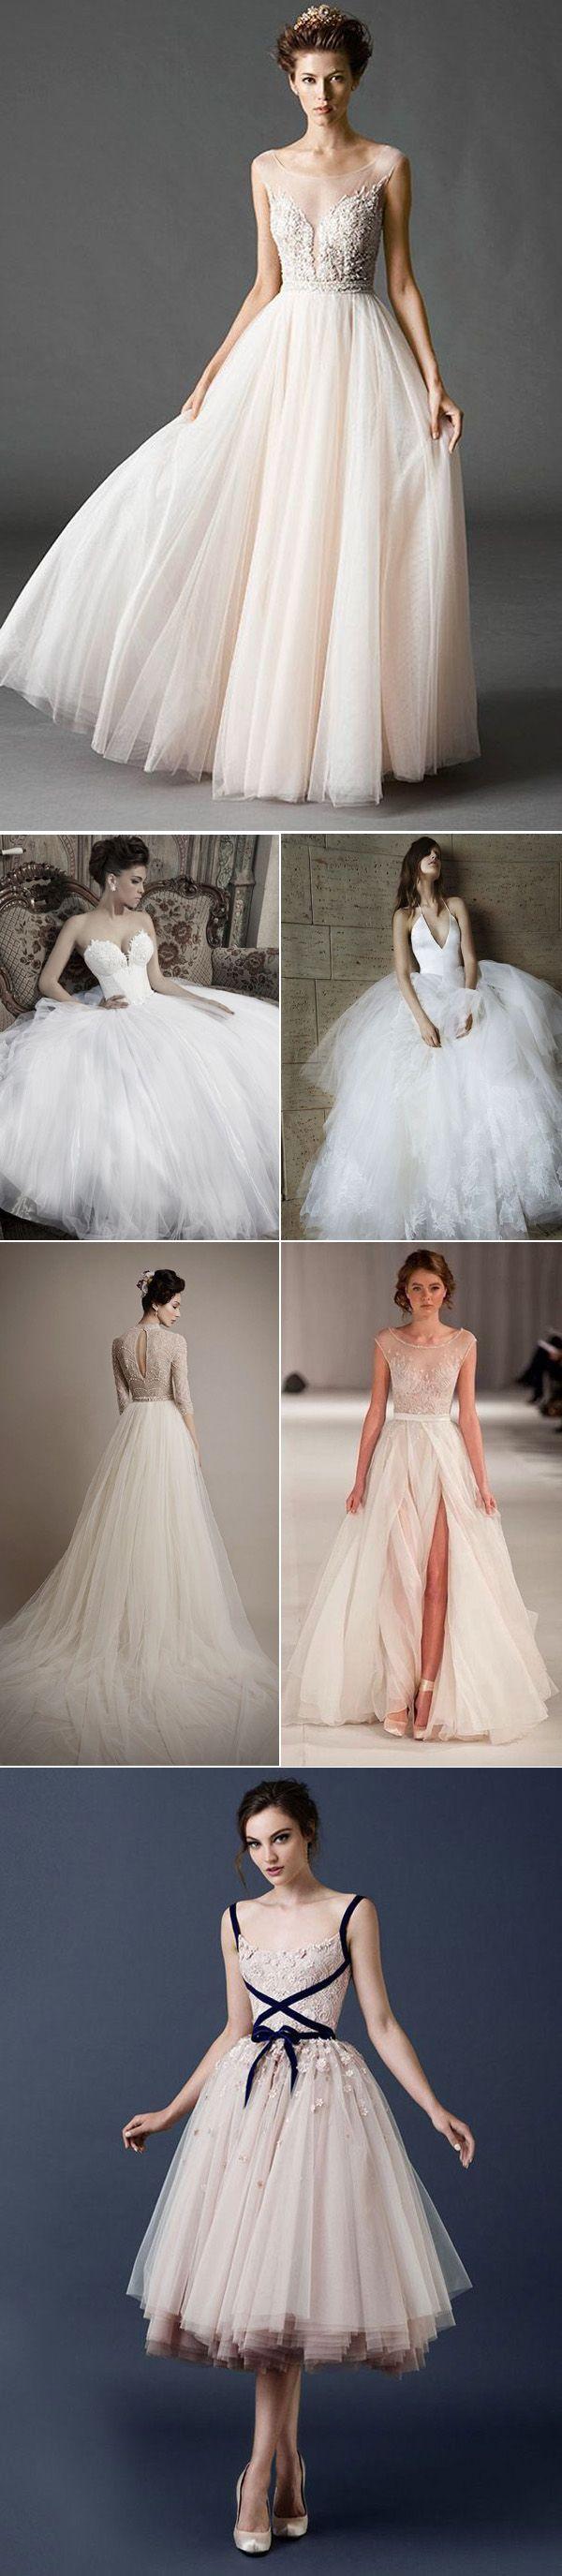 Hochzeit - Top 9 Trends For Wedding Dresses 2015